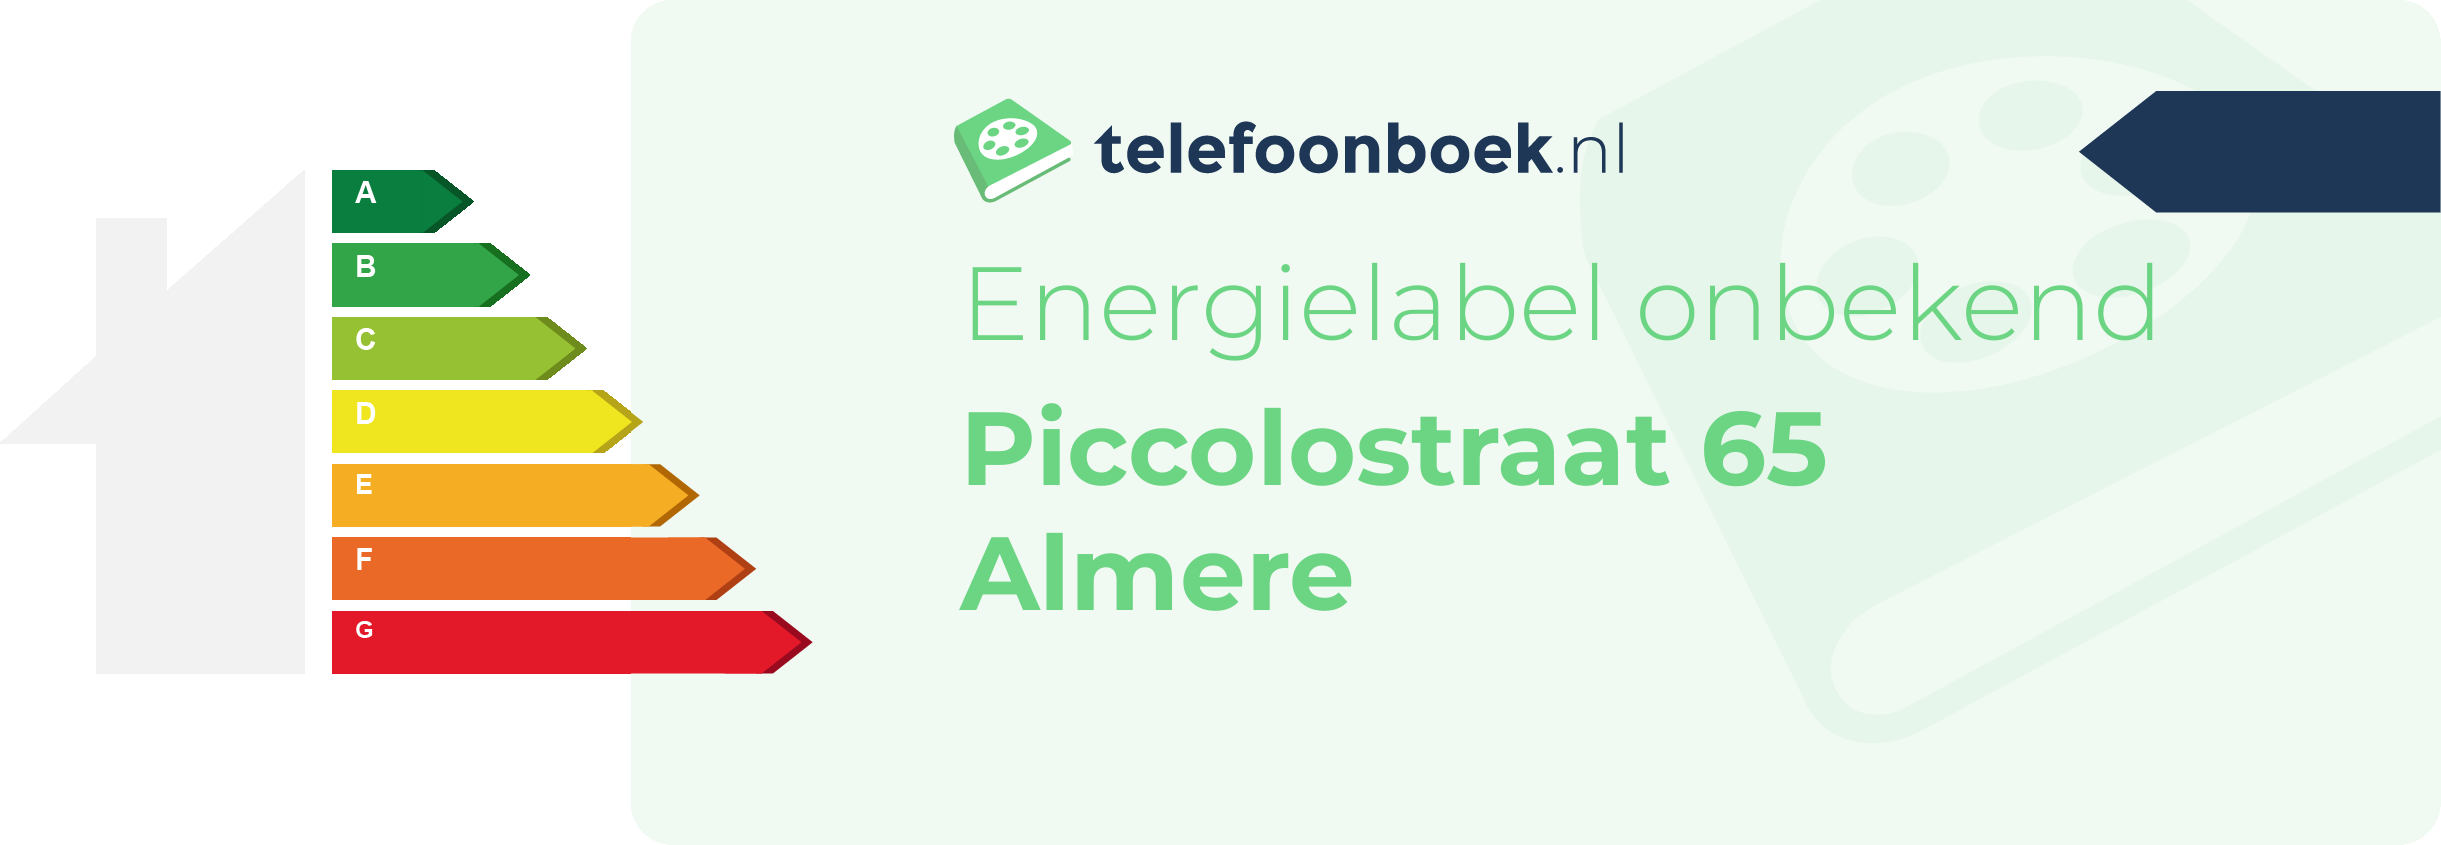 Energielabel Piccolostraat 65 Almere